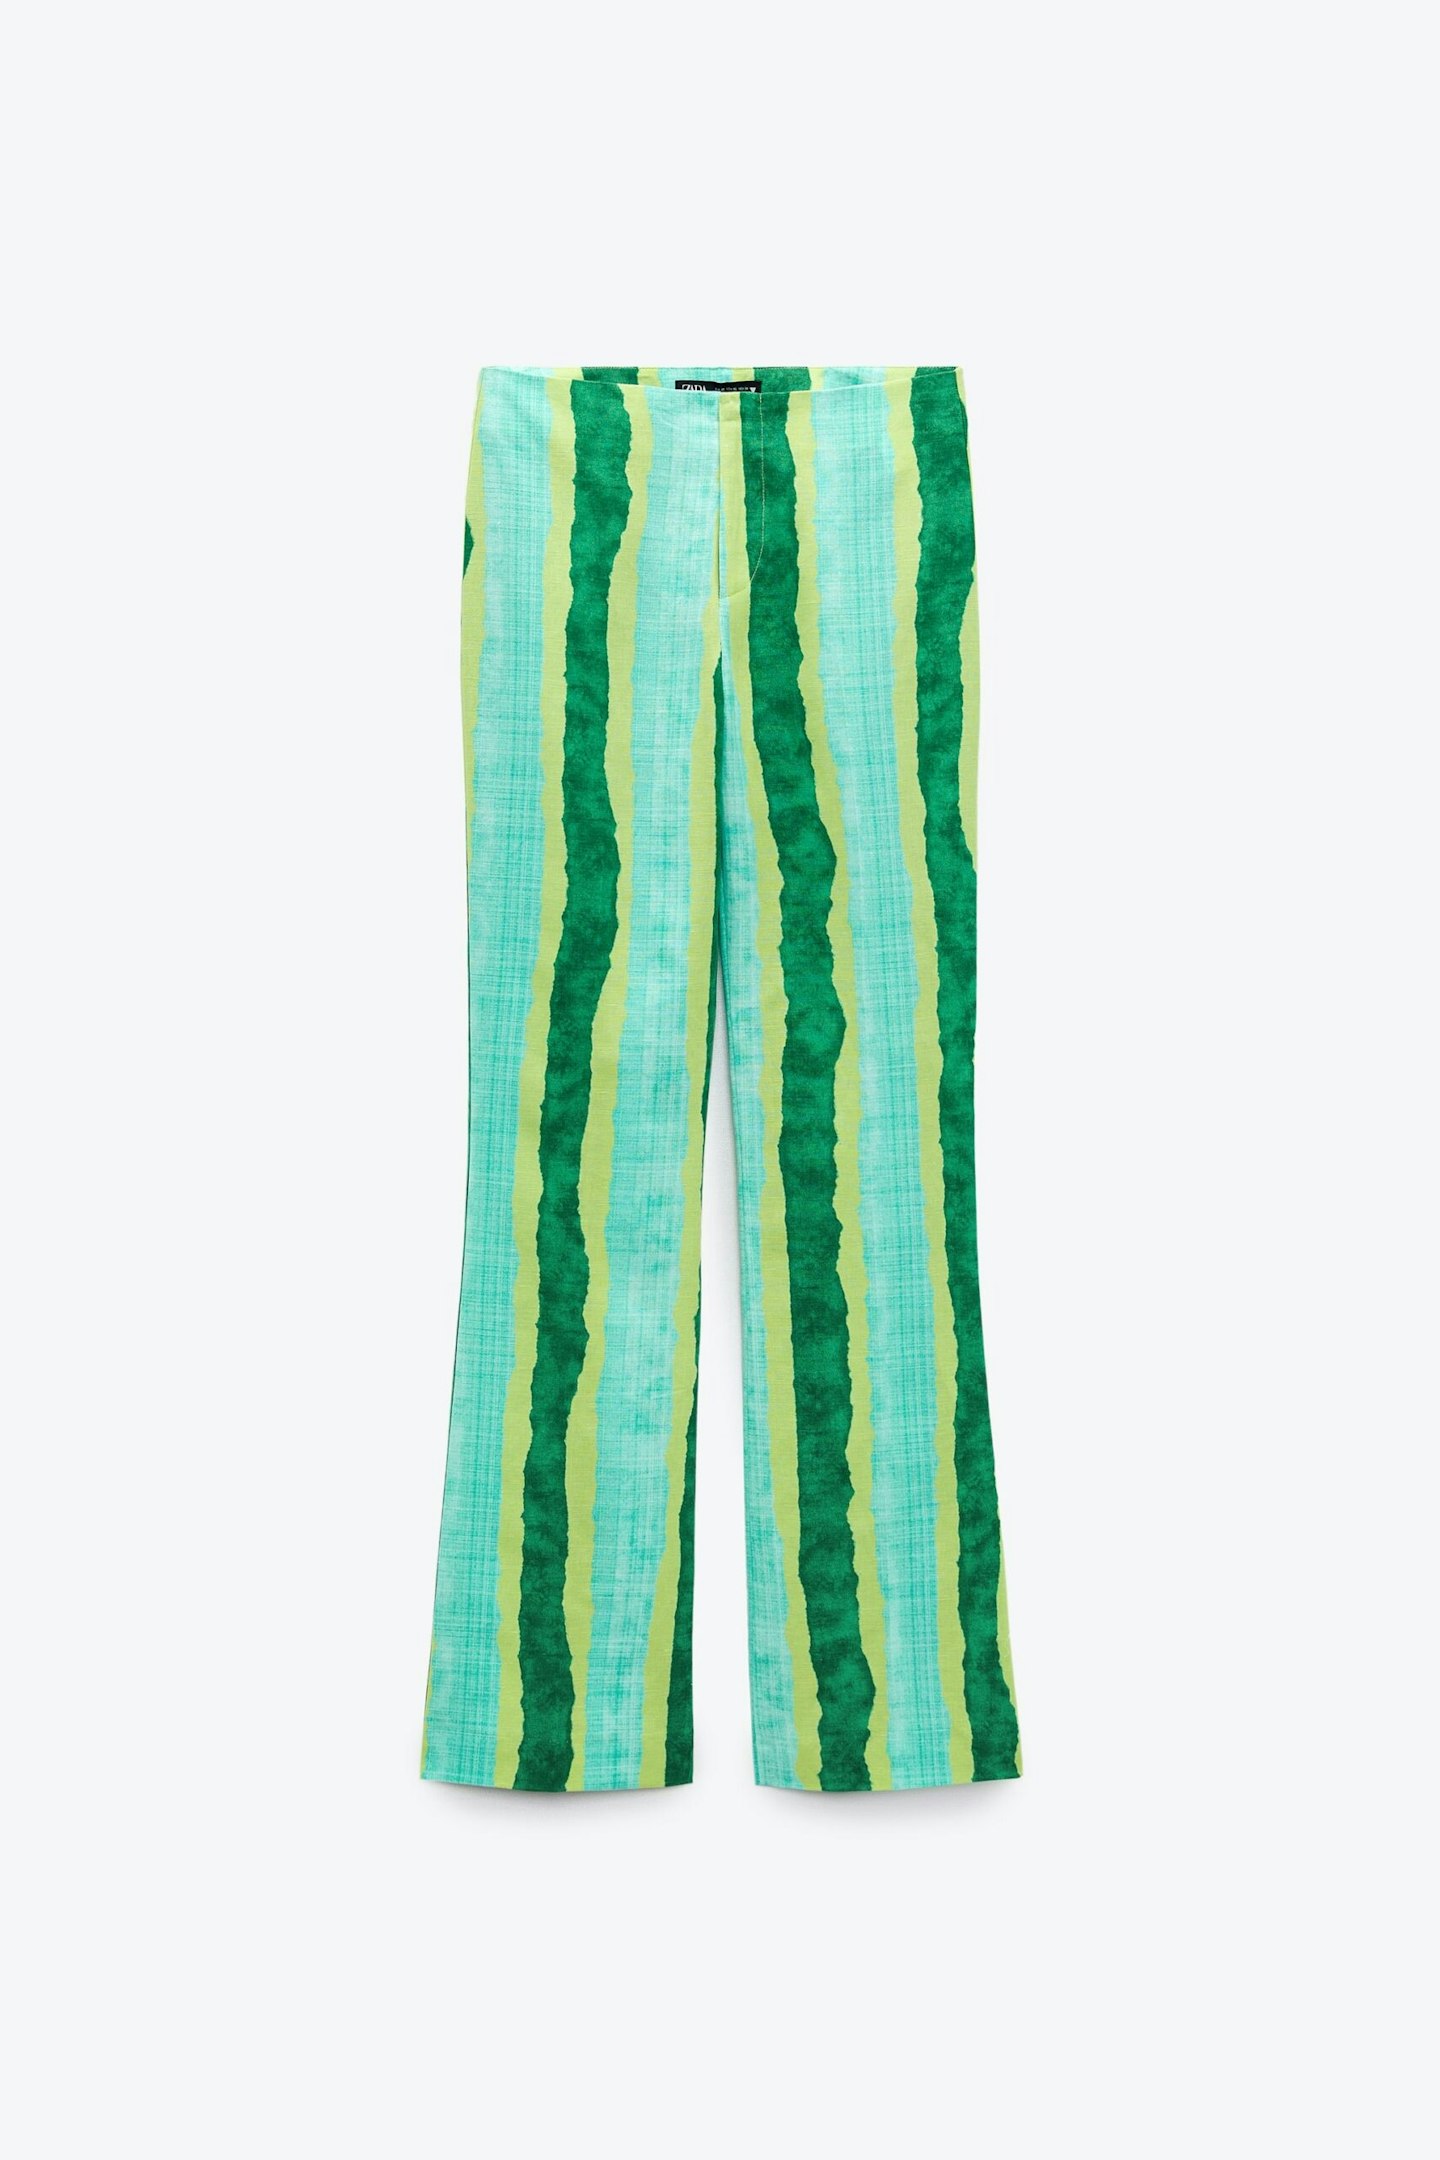 Zara, Striped Linen Blend Flared Trousers